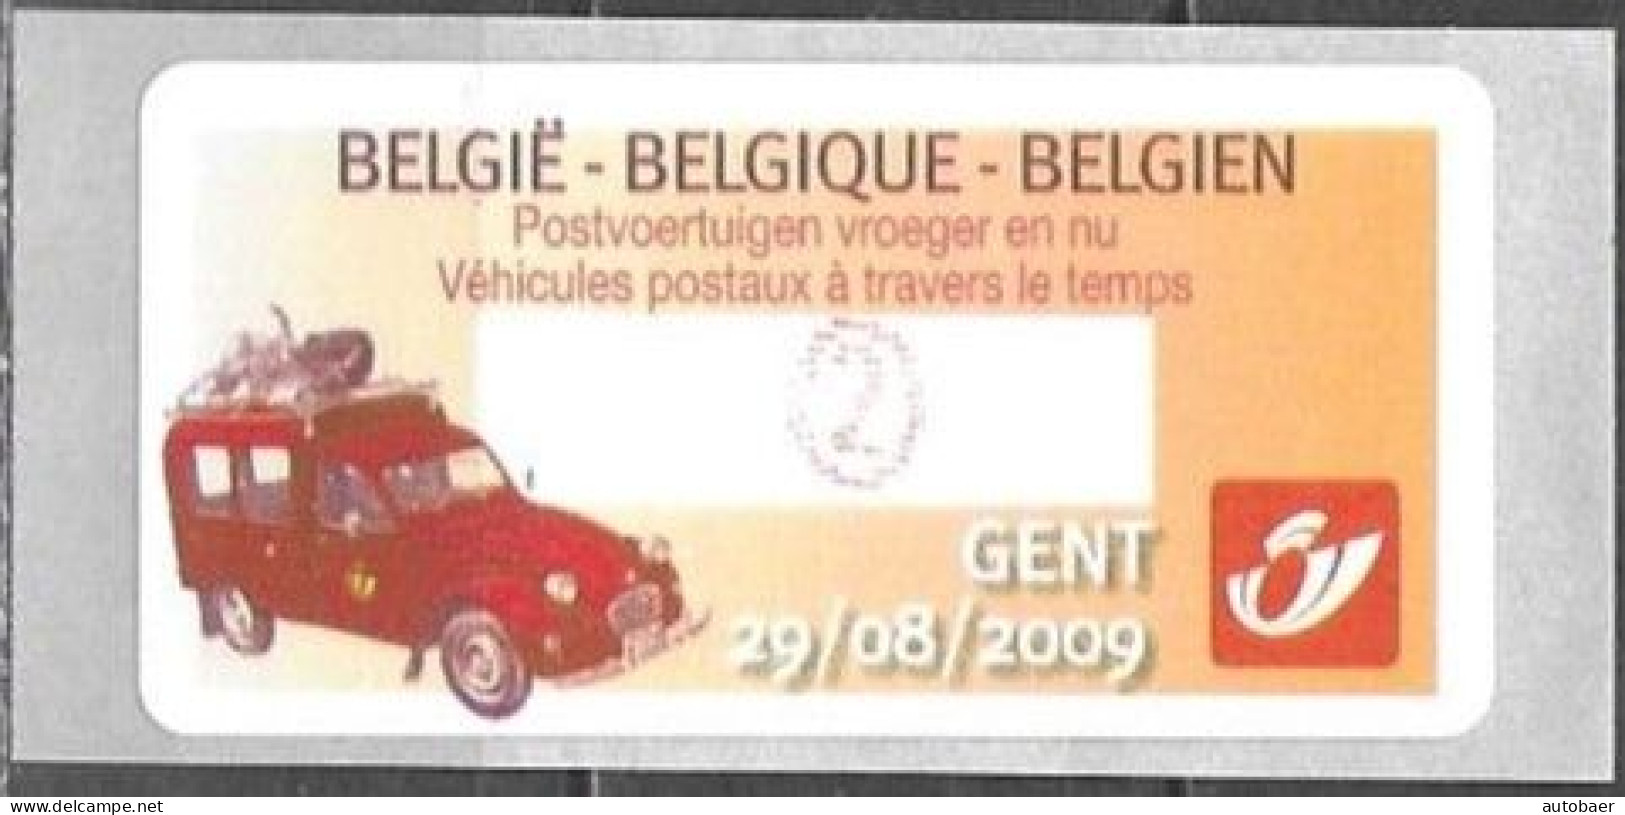 Belgium Belgique Belgien 2009 ATM Machine Stamp Gent Citroen 2CV Mi. No. 67 "2" MNH Neuf ** Postfrisch - Mint